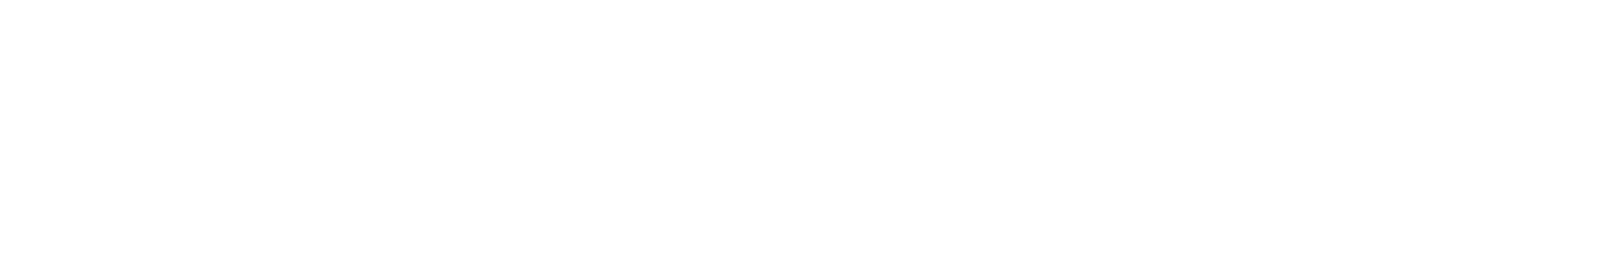 SERVICE